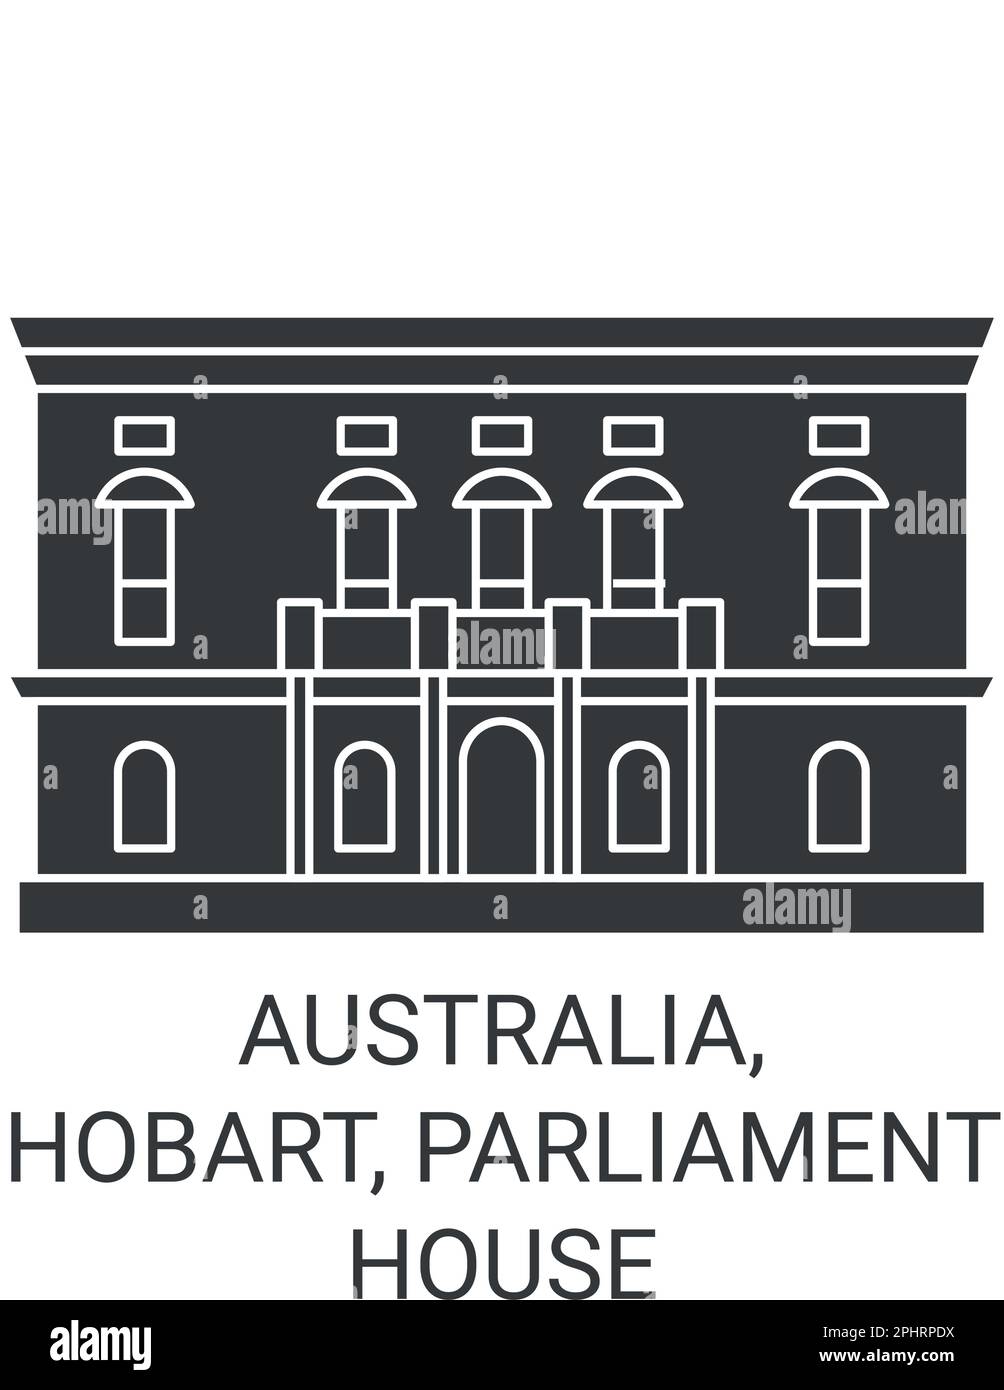 Australia, Hobart, Parliament House travel landmark vector illustration Stock Vector